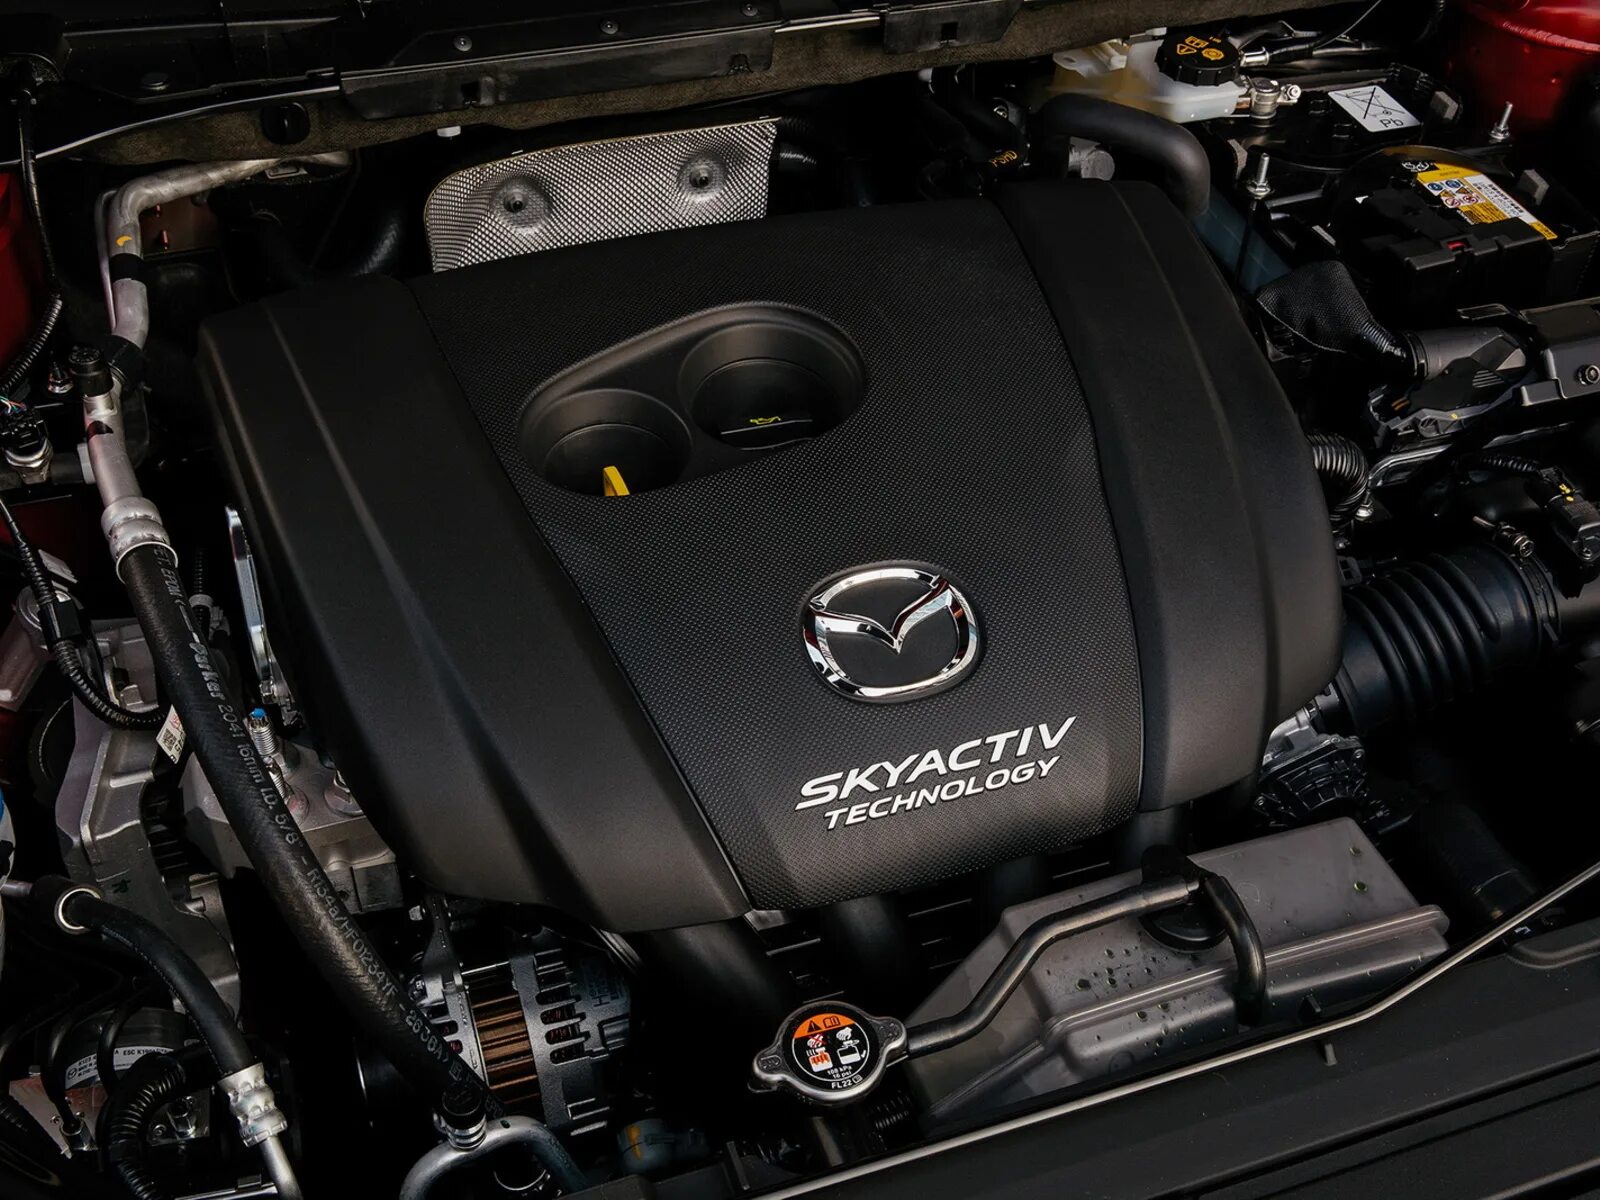 Mazda CX 5 SKYACTIV. Двигатель Mazda CX-5 2.0 SKYACTIV. Mazda CX 5 моторный отсек. Двигатель скайактив Мазда. Мазда сх5 скайактив